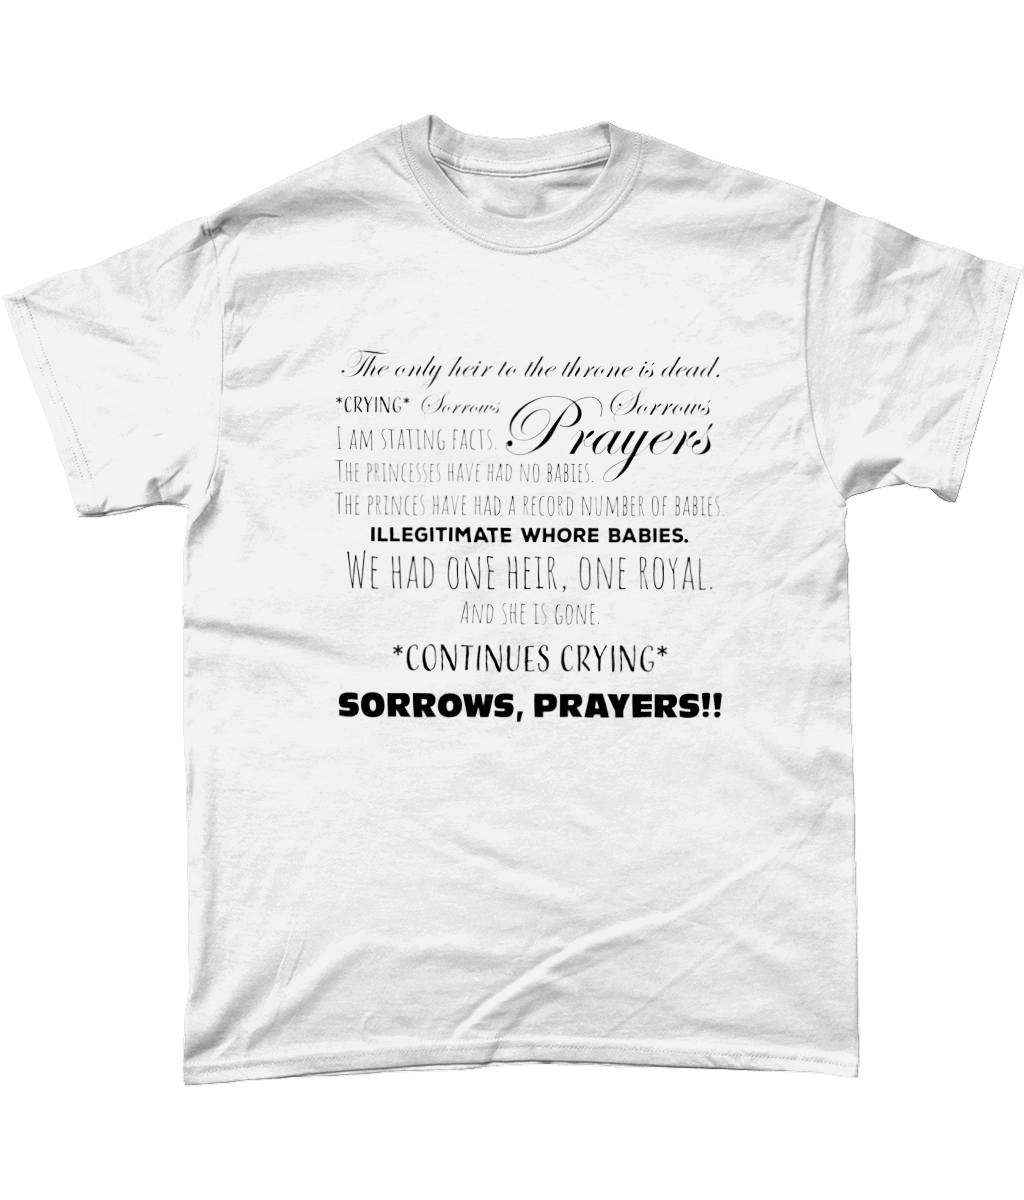 Sorrows, Sorrows, Prayers T-Shirt